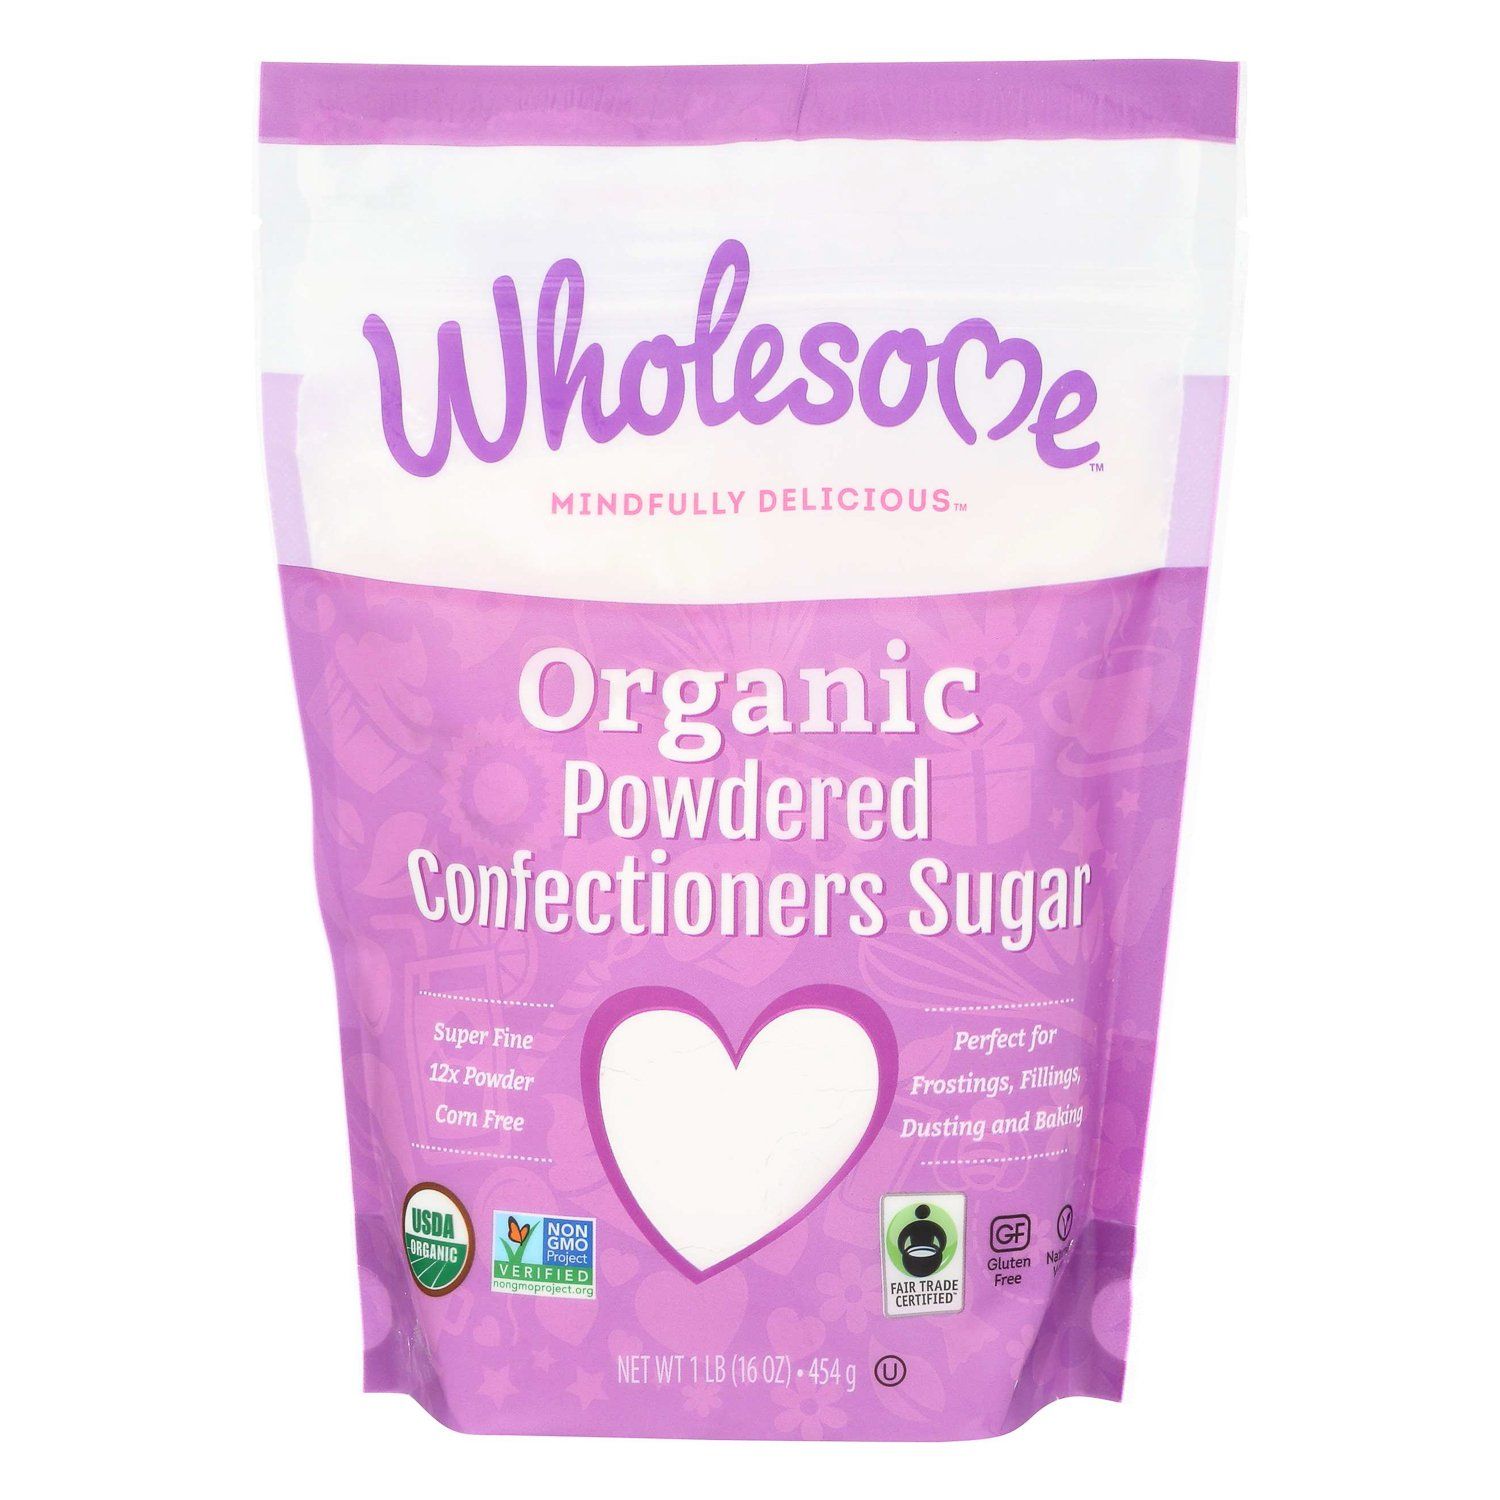 Wholesome Sweeteners Organic Powdered Sugar Wholesome Sweeteners 12x Powder Fair Trade 1 Pound 